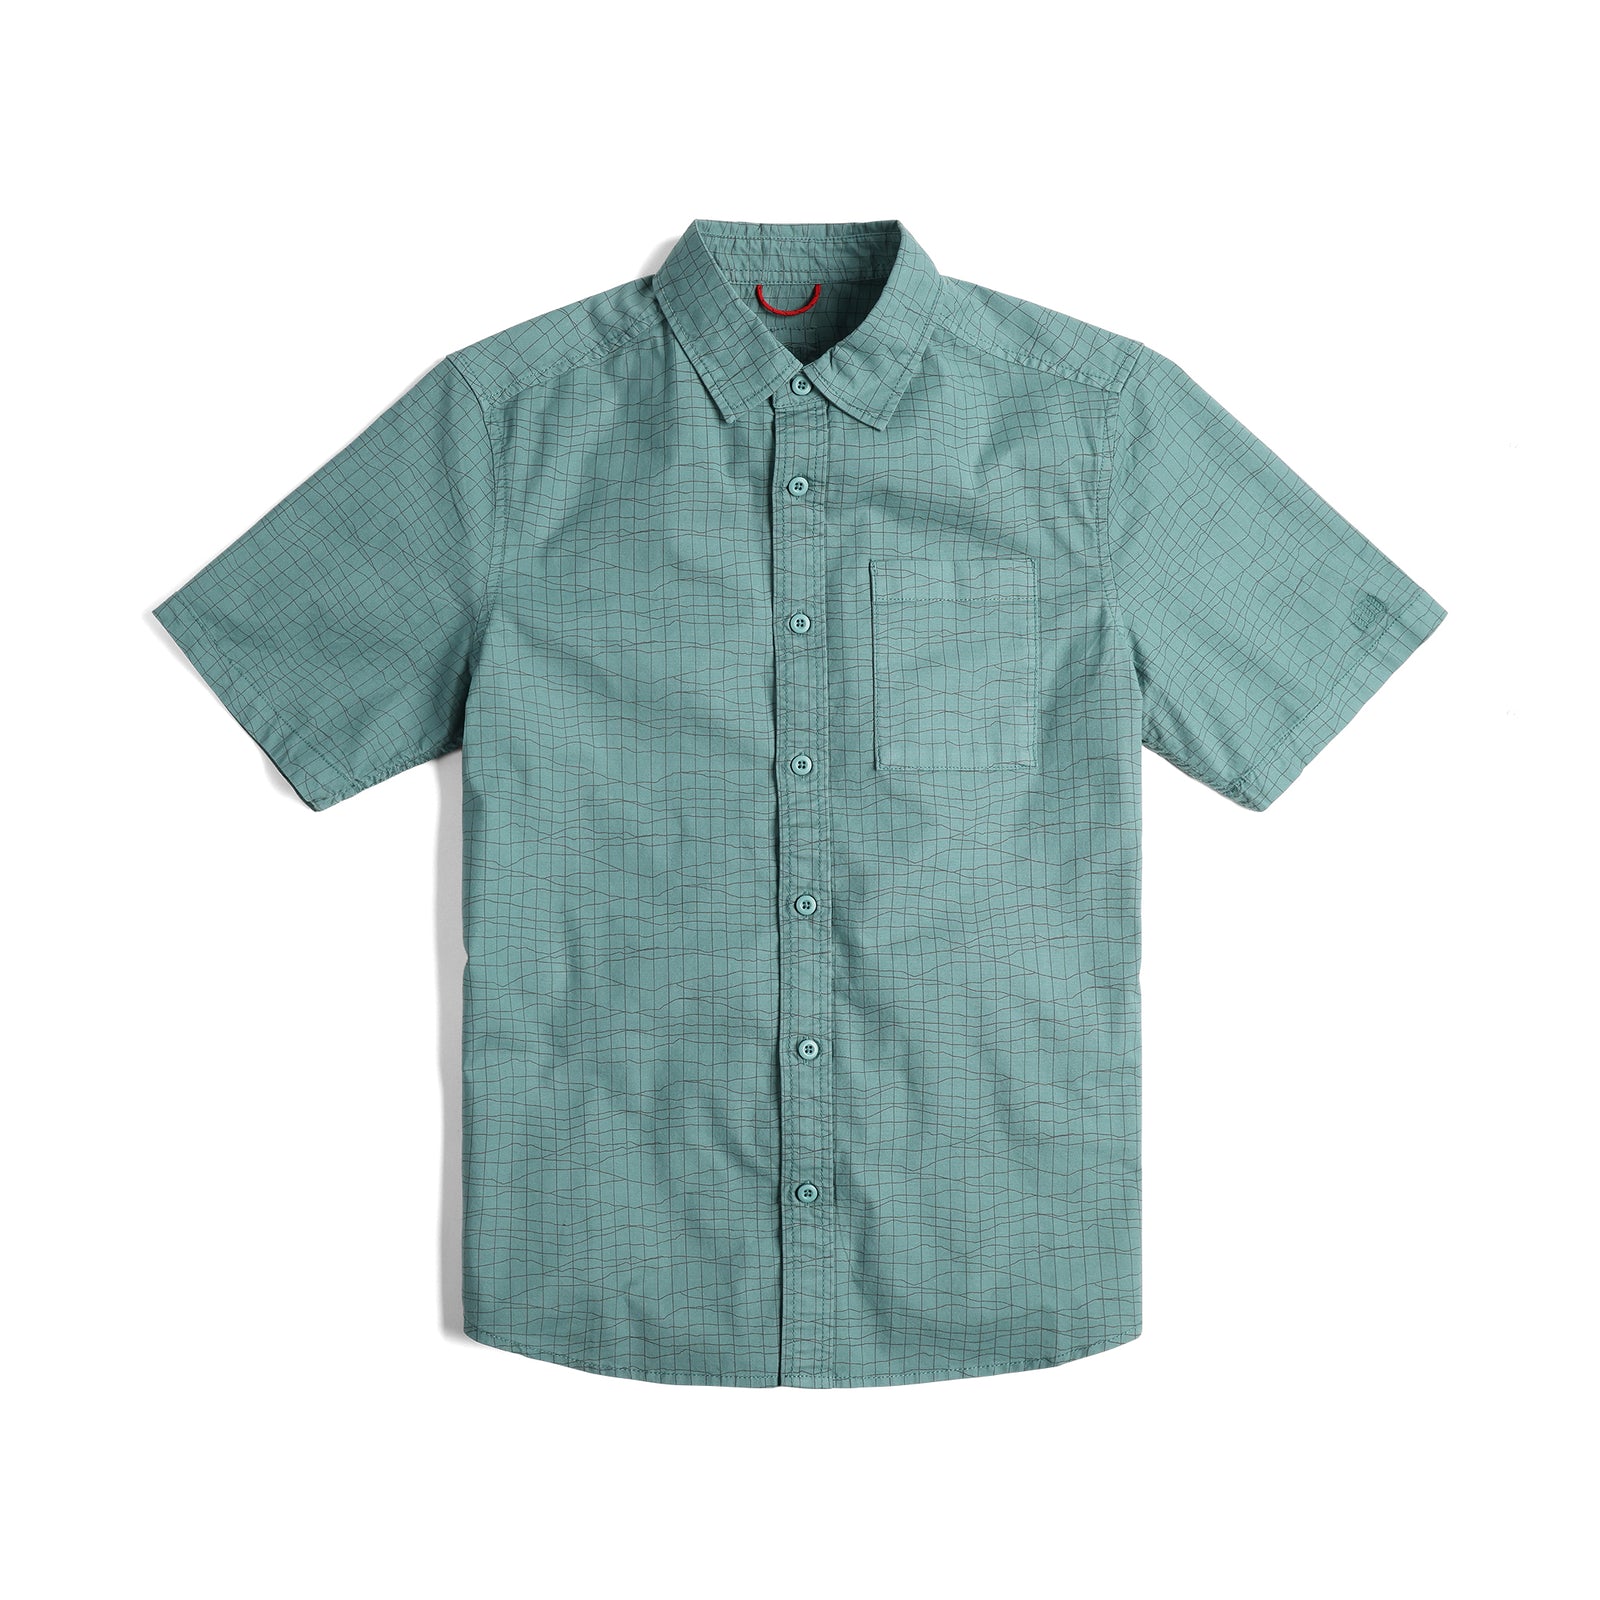 Front View of Topo Designs Dirt Desert Shirt Ss - Men's in "Sea Pine Terrain"